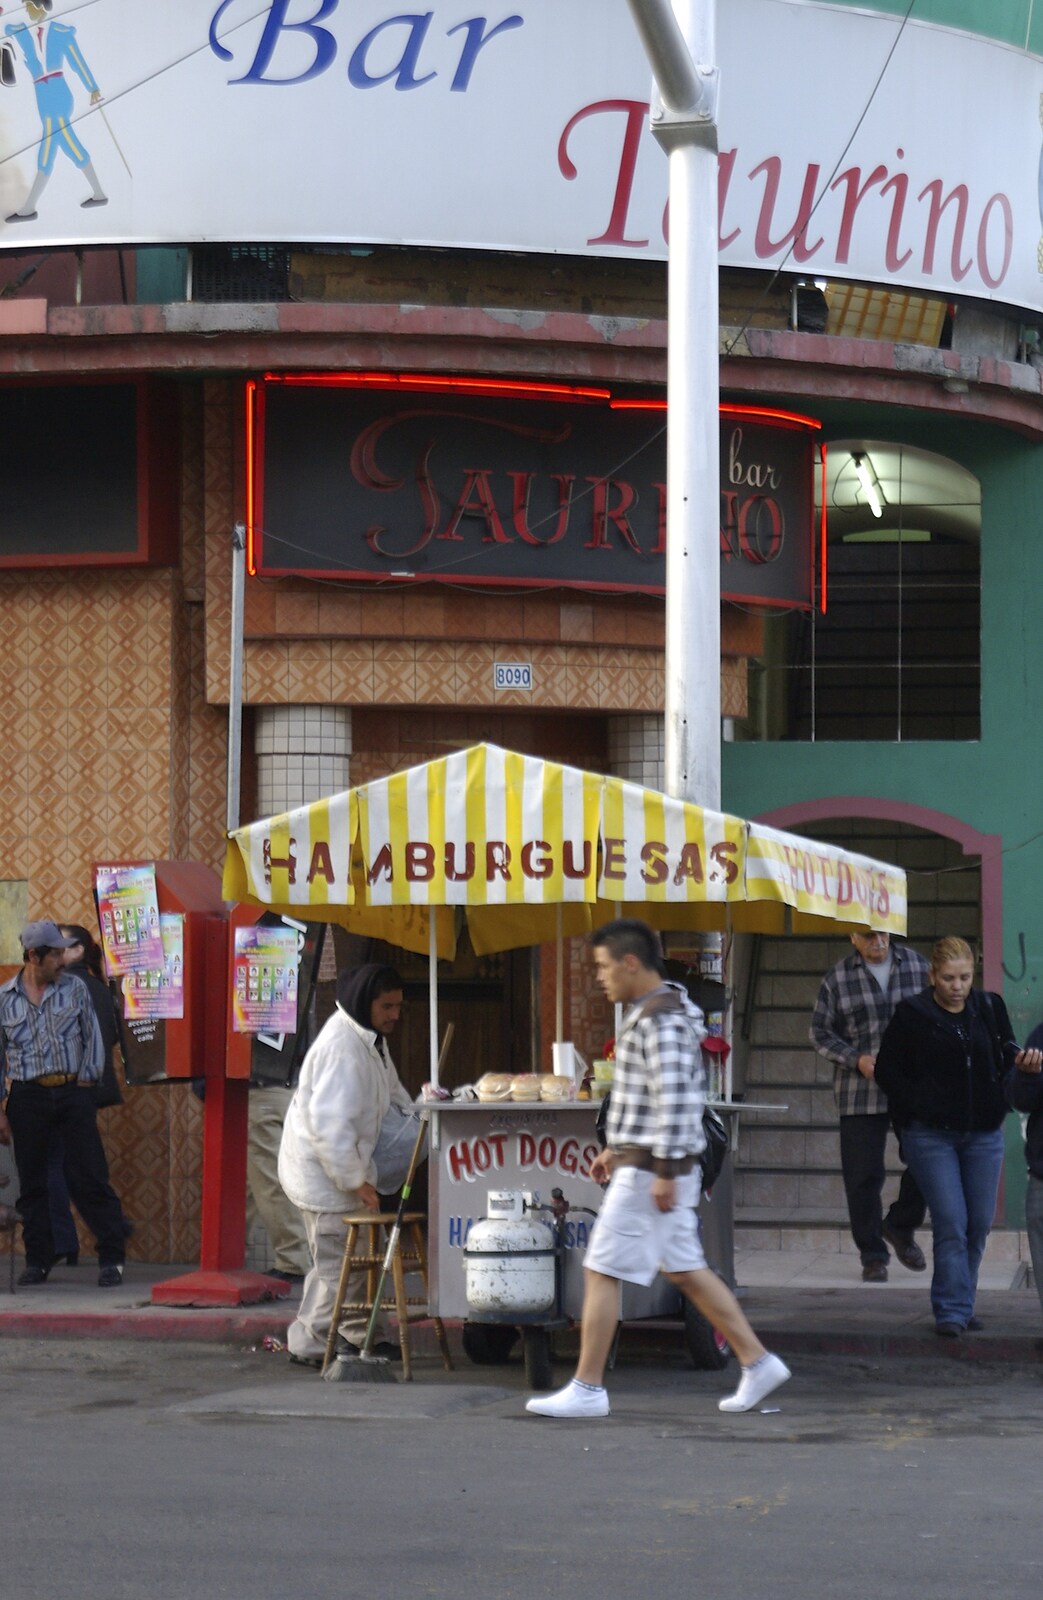 Rosarito and Tijuana, Baja California, Mexico - 2nd March 2008: A street hamburger stand